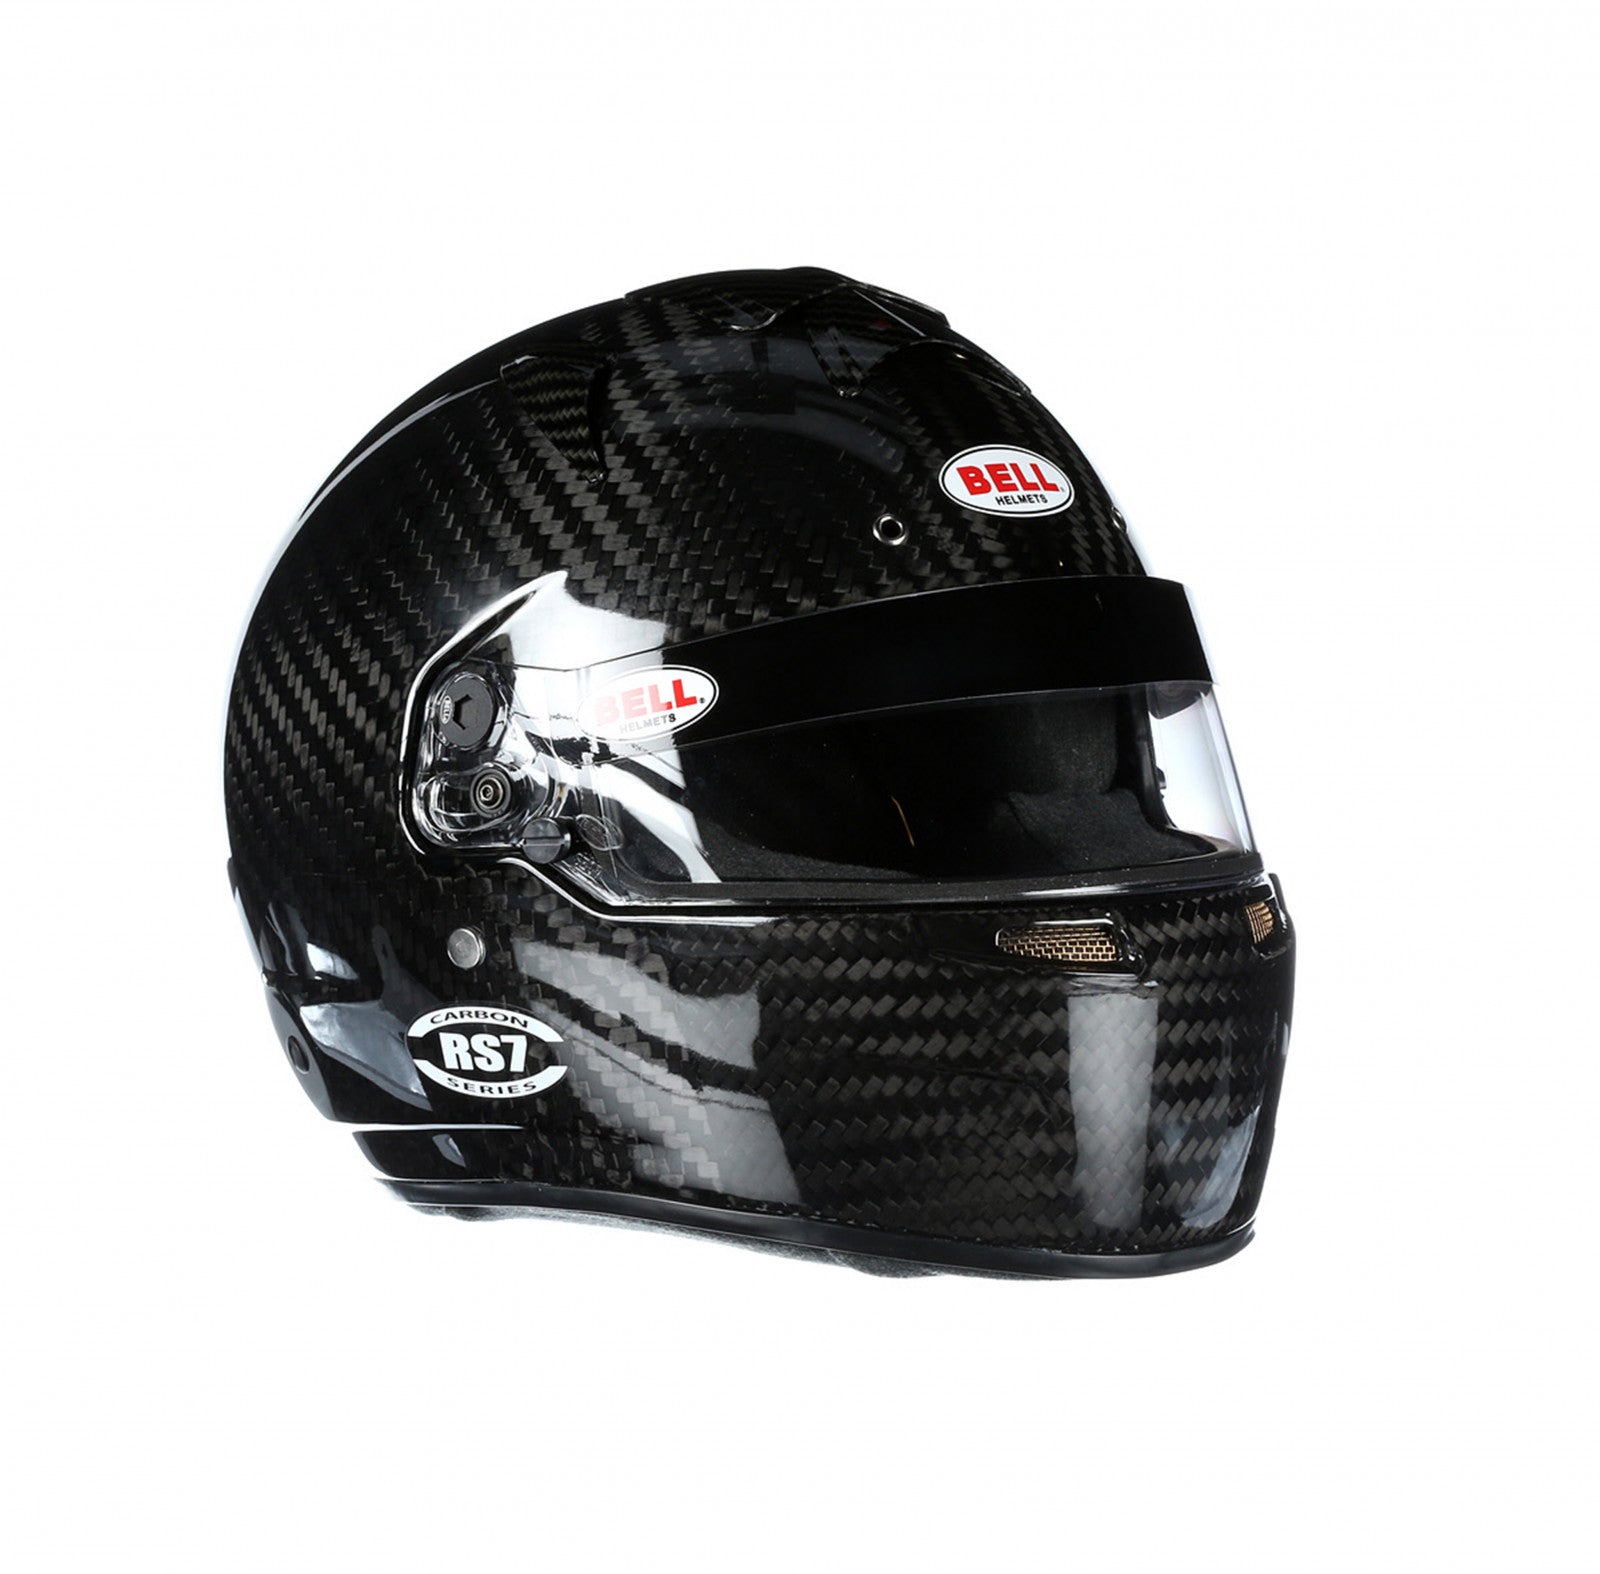 Bell RS7 Carbon Helmet Size 54 cm